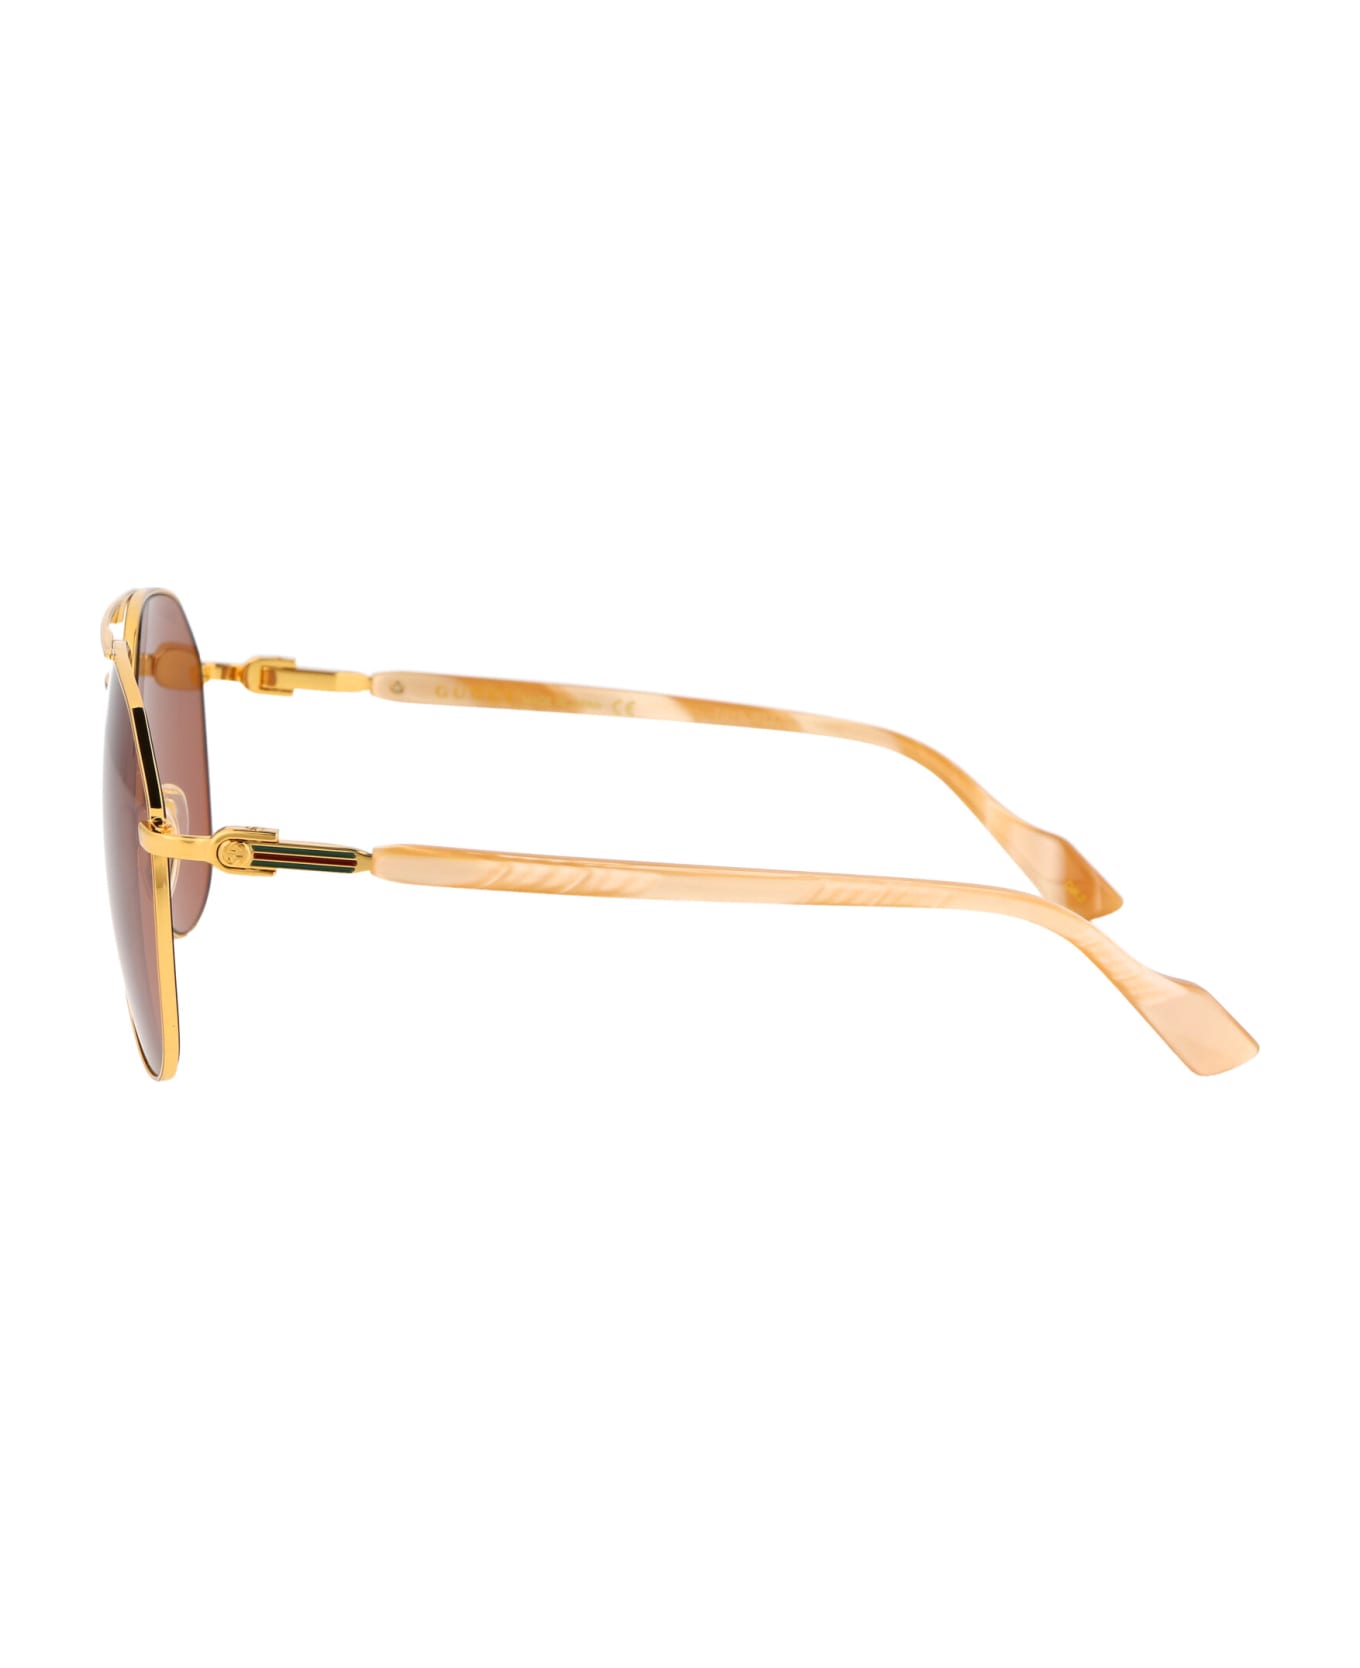 Gucci Eyewear Gg1220s Sunglasses - 003 GOLD GOLD BROWN